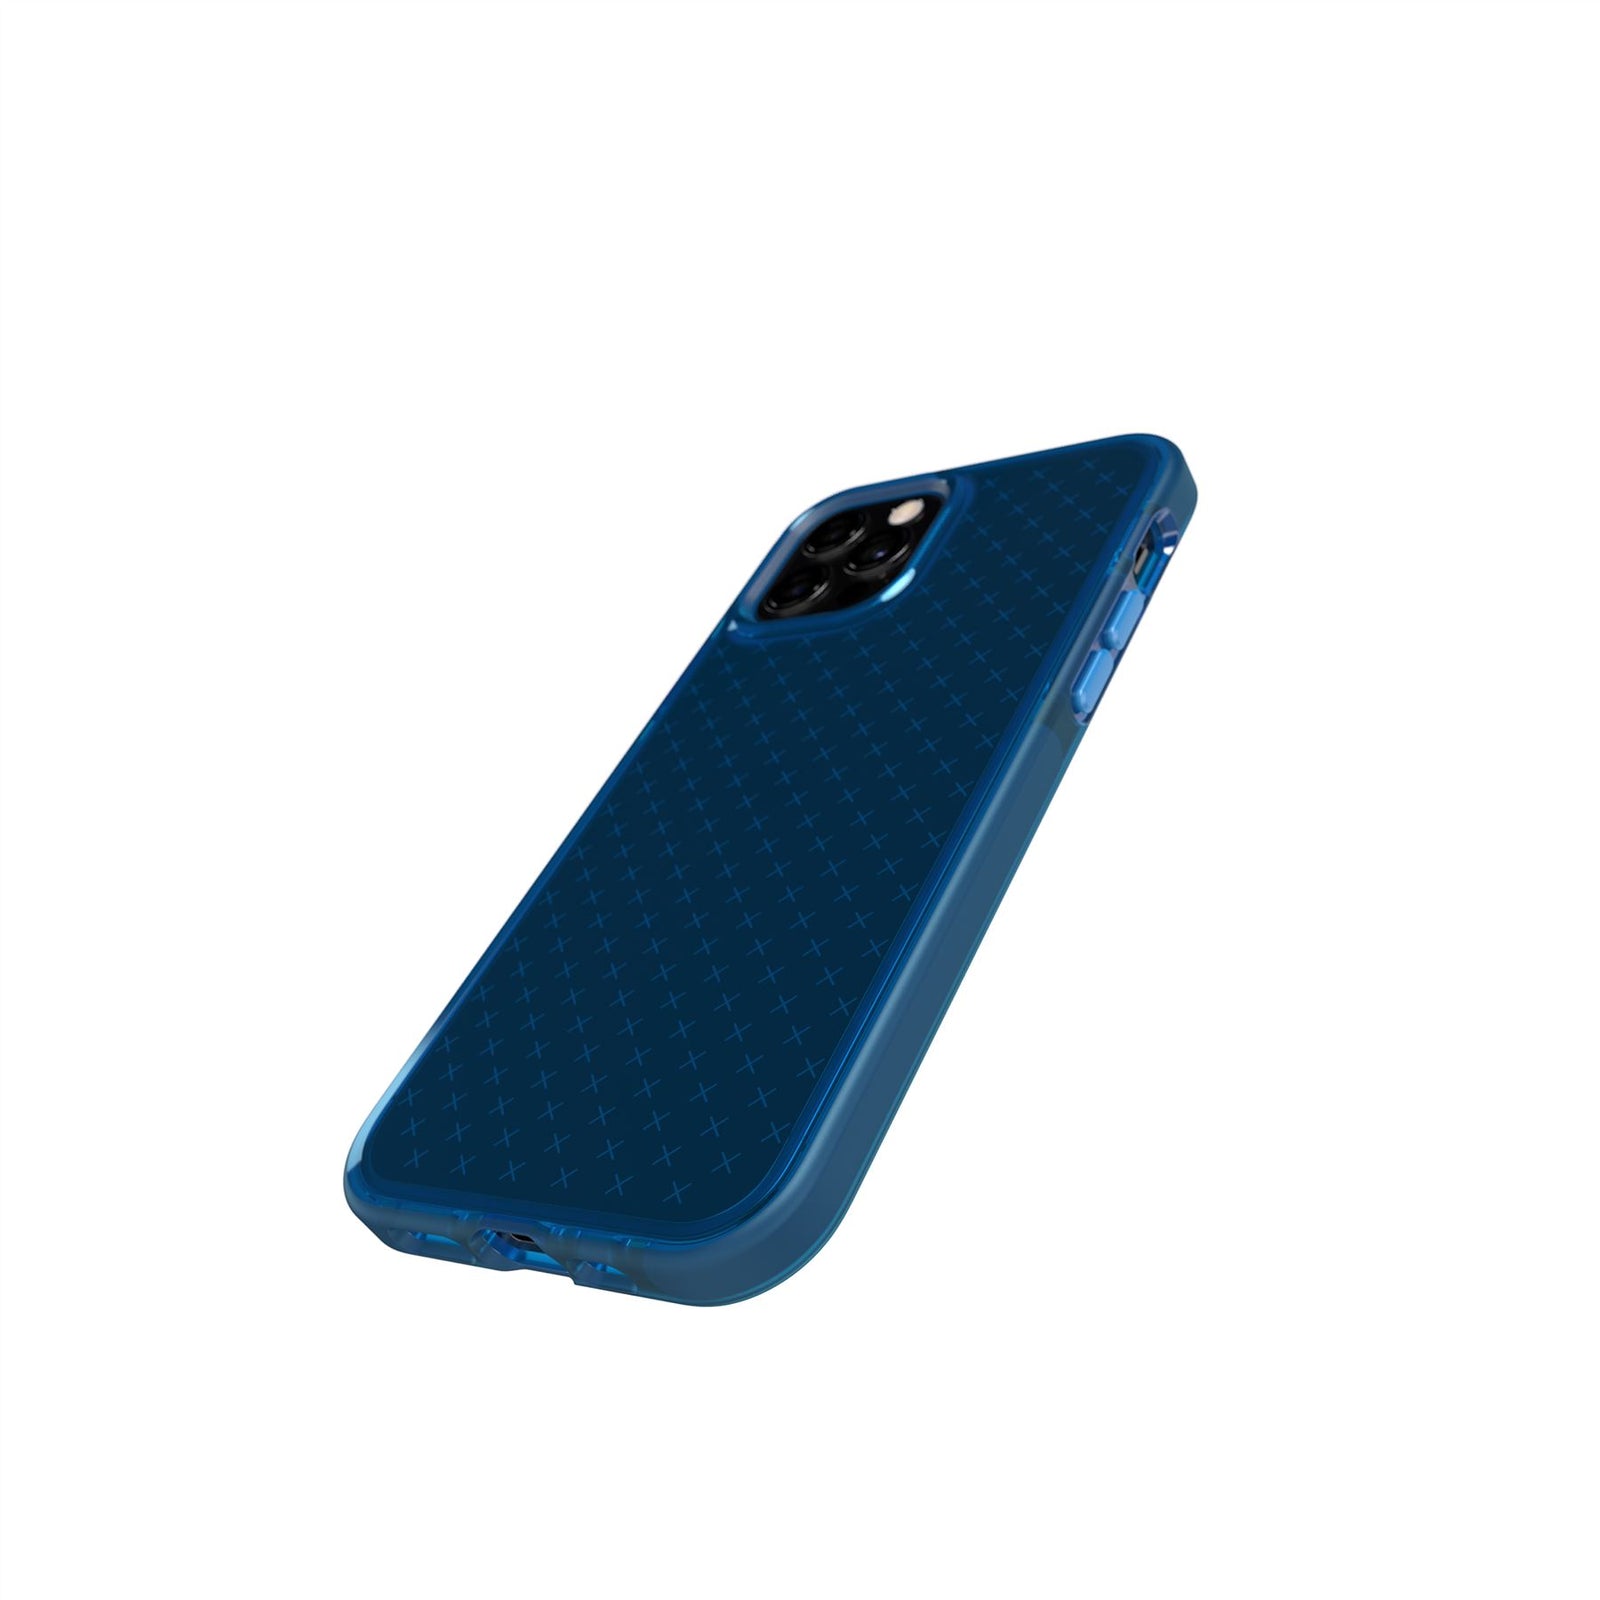 Evo Check - Apple iPhone 12/12 Pro Case - Classic Blue